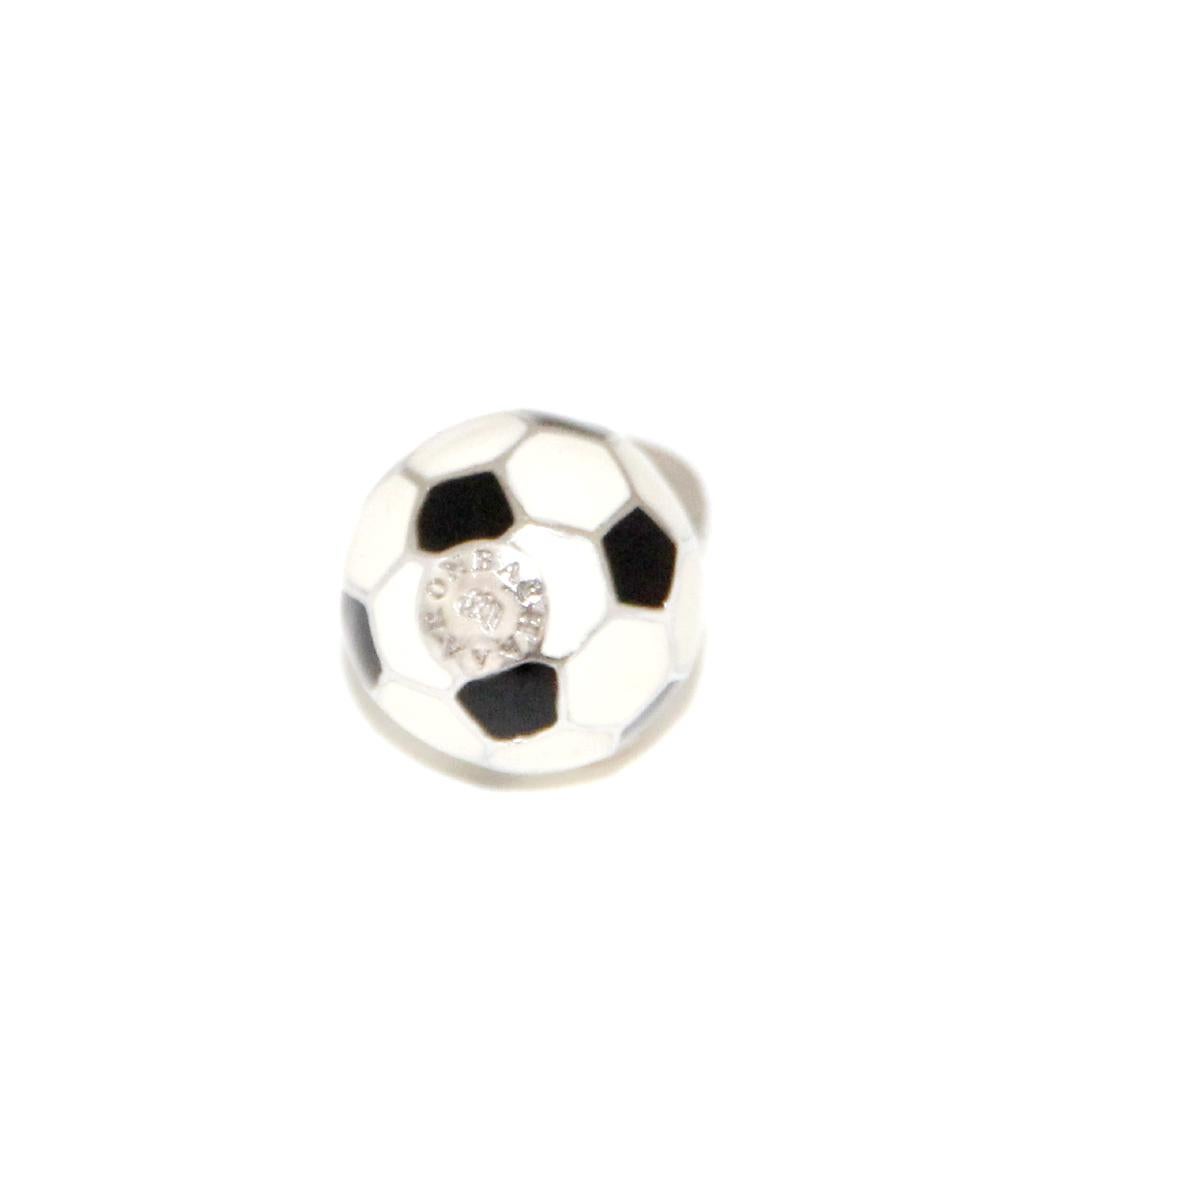 Aaron Basha 18K White Gold and Diamonds Soccer Ball Pendant/ Charm
Diamonds 0.14ctw
Black and White Enamel
Retail $2,800.00
